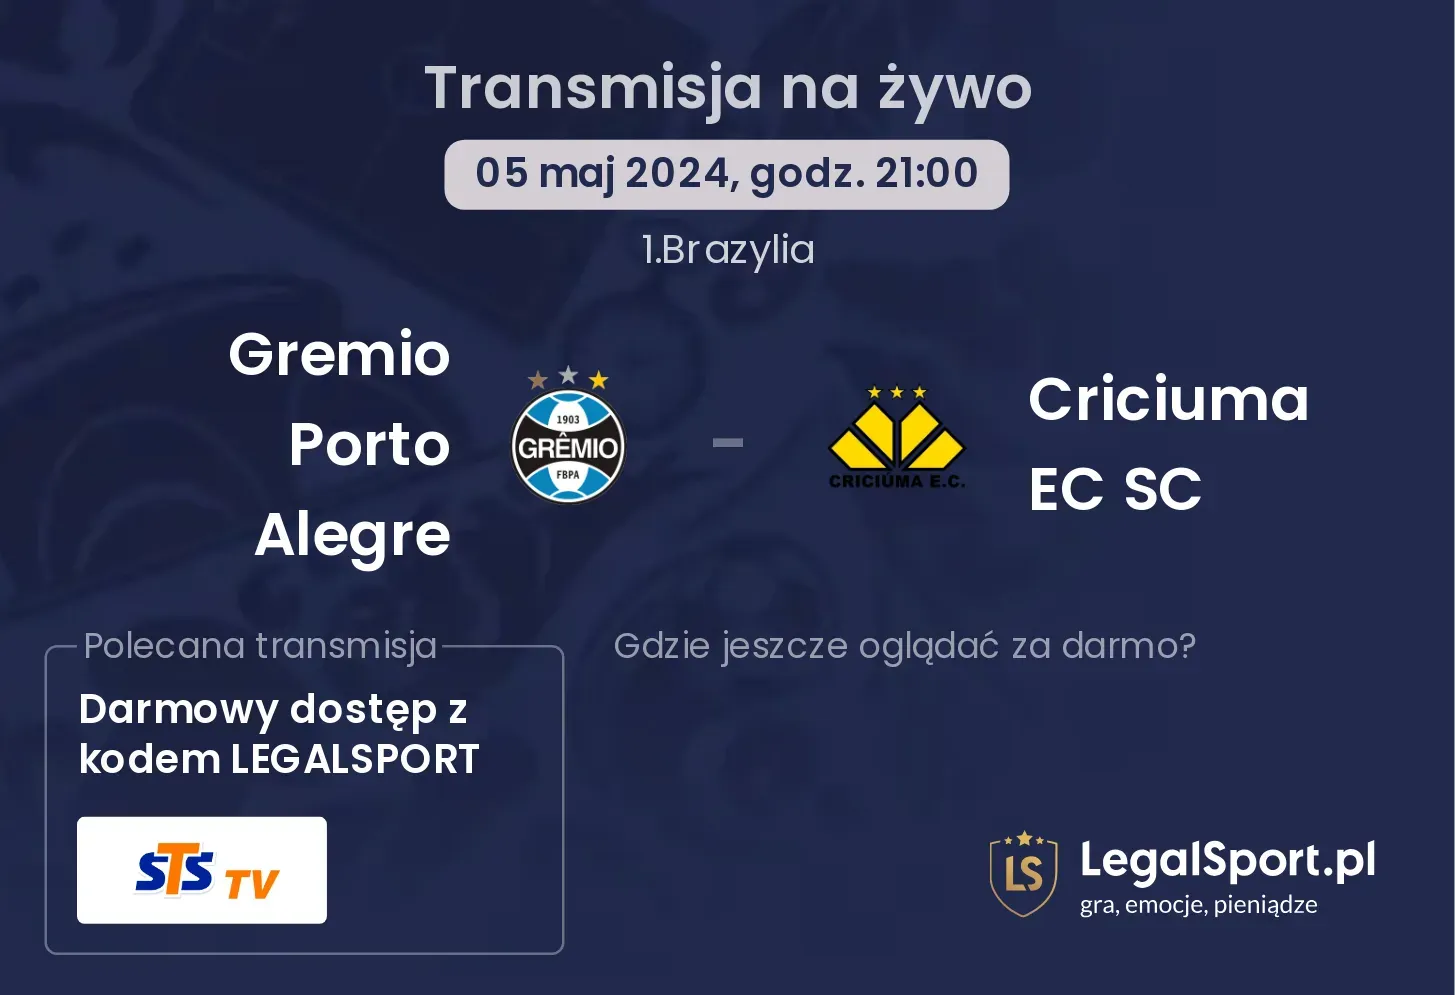 Gremio Porto Alegre - Criciuma EC SC transmisja na żywo